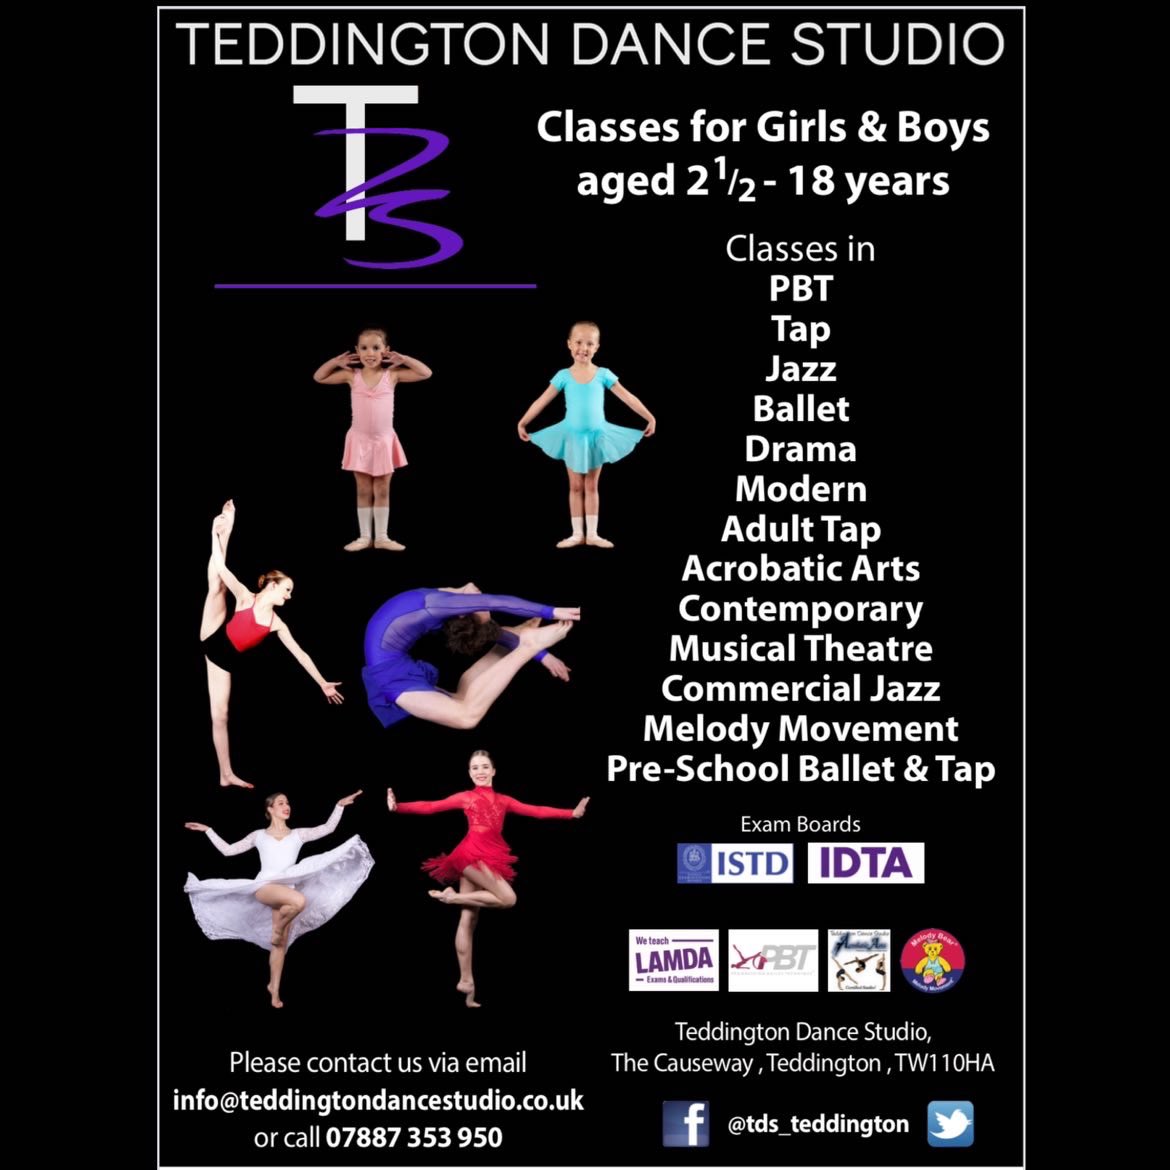 Teddington Dance Studio Teddington’s Award Winning Performing Arts school. Dance Act & Sing #teddingtondancestudio #teddingtonkids #tdsteddington #teddingtontown teddingtondancestudio.co.uk